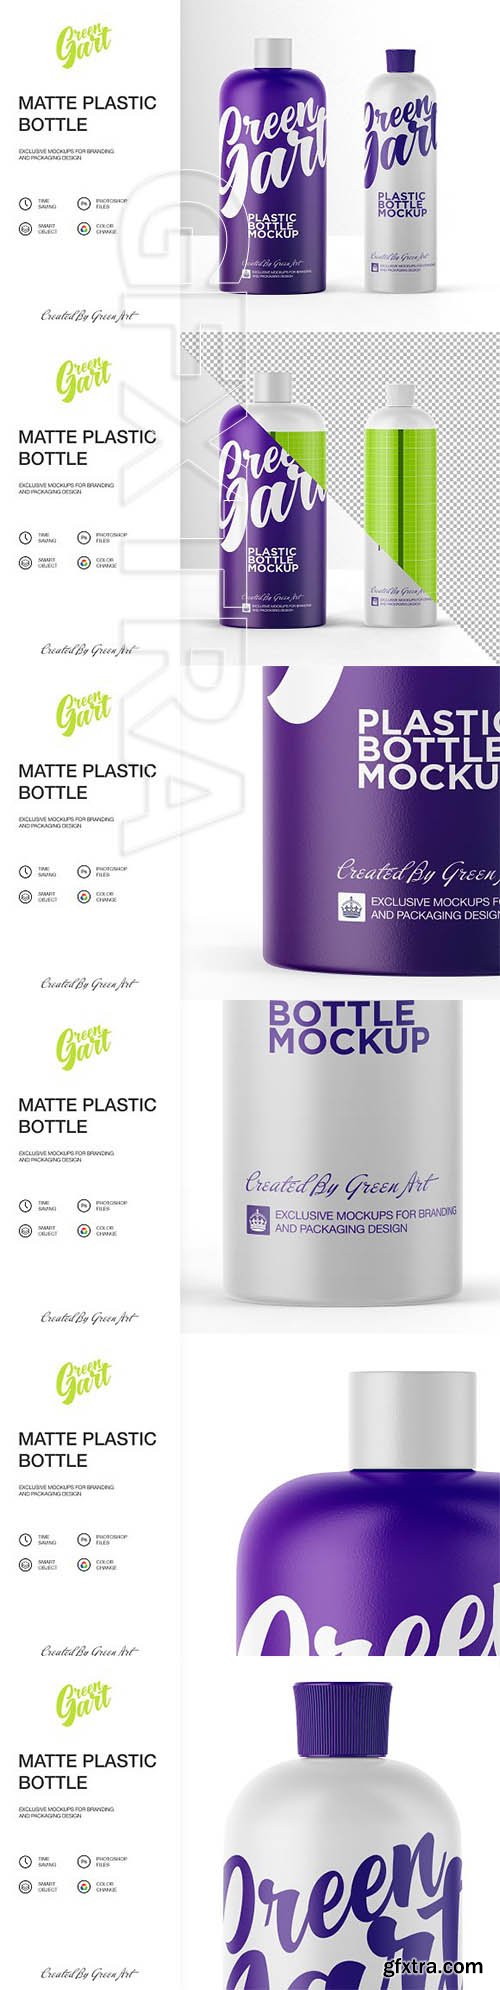 CreativeMarket - 2 PSD Matte Plastic Bottle Mockup 2334157